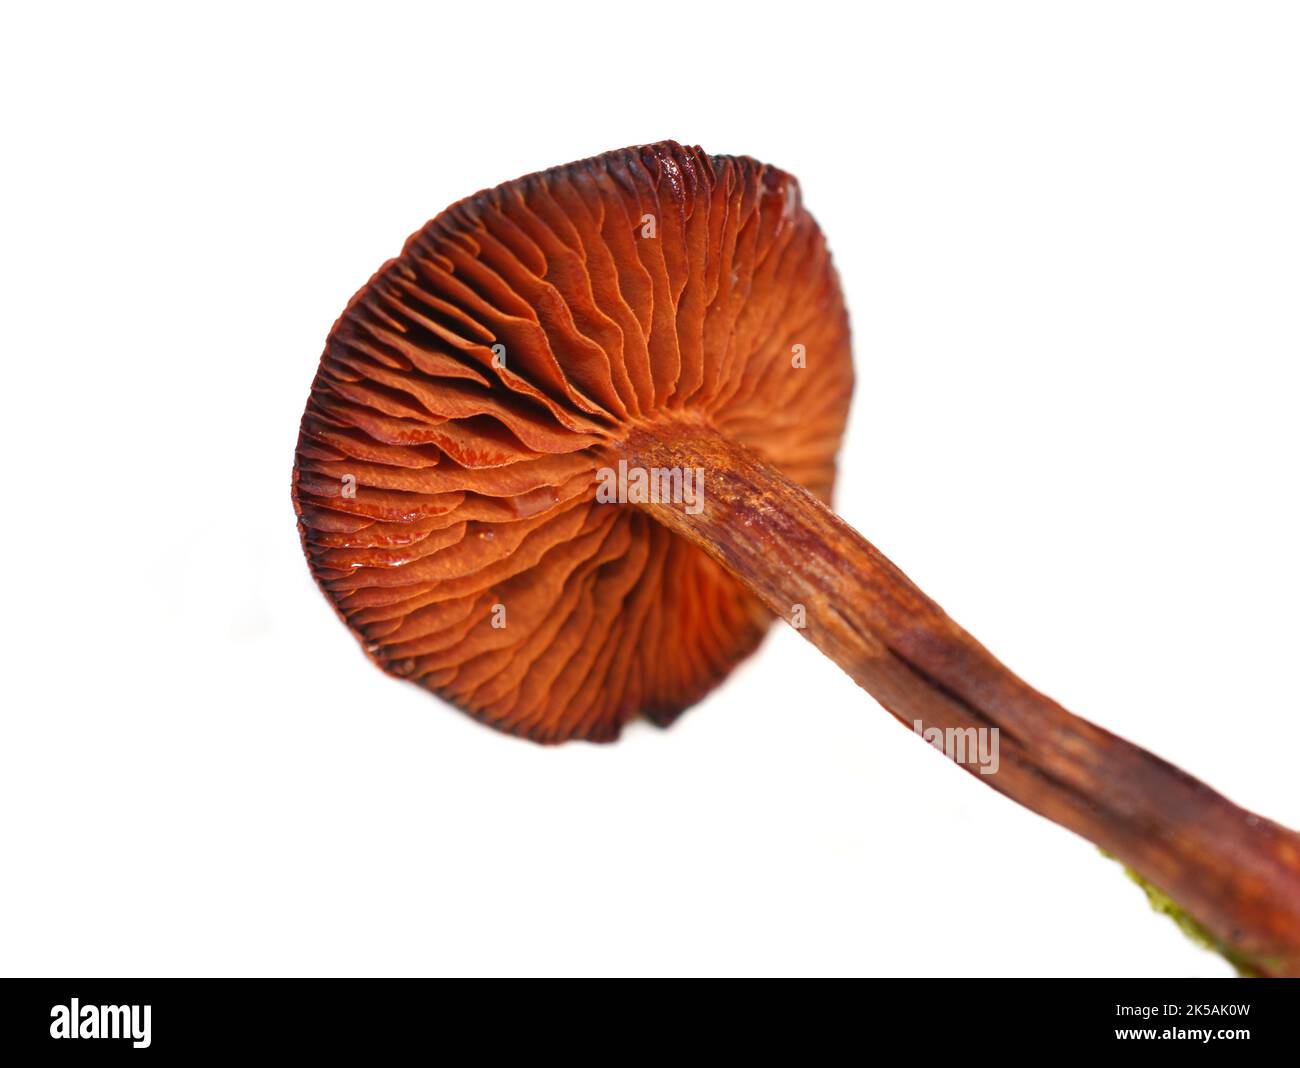 blood red webcap Cortinarius sanguineus natural dye mushroom isolated on white background Stock Photo